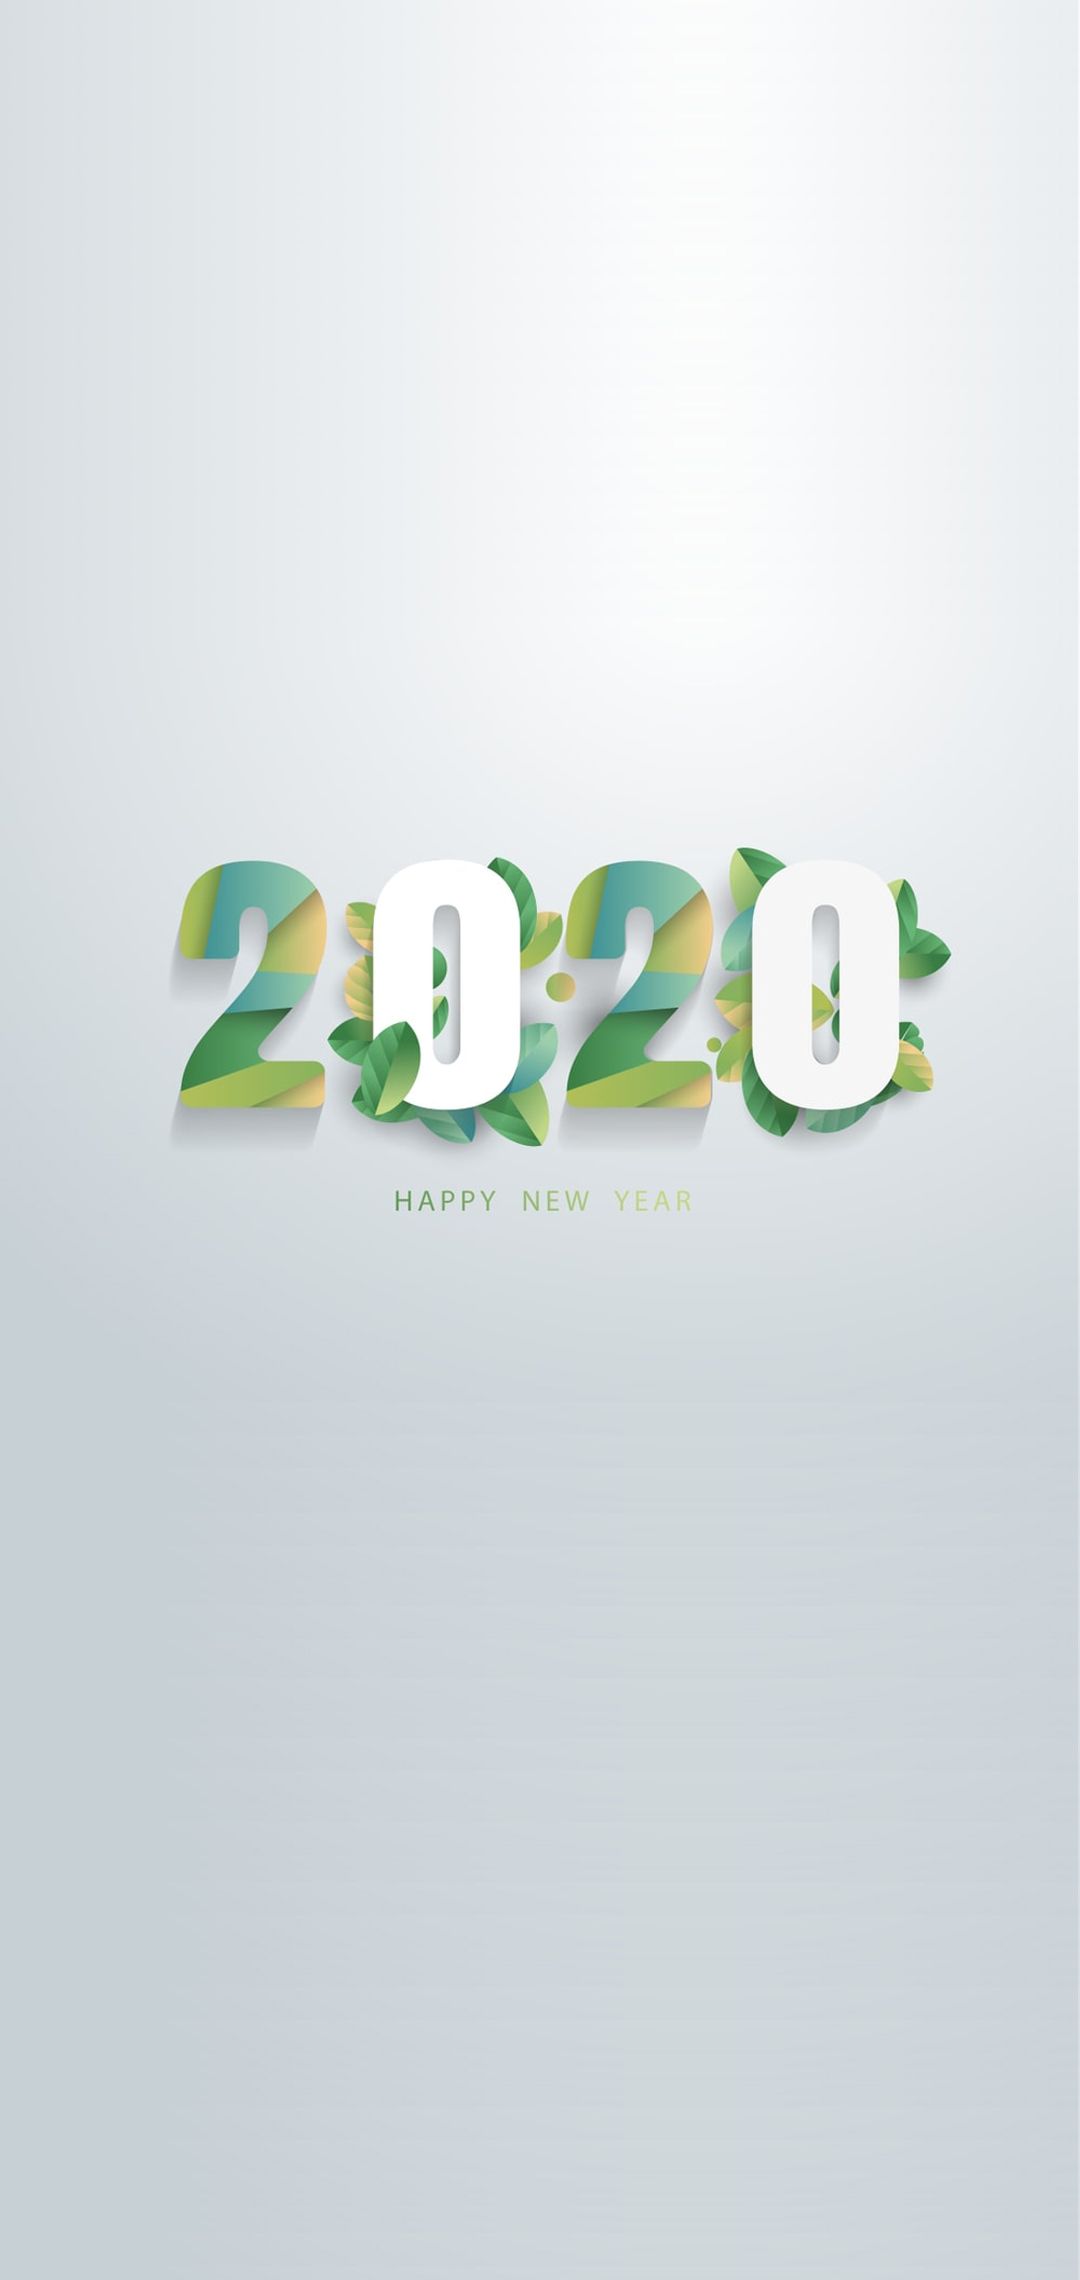 Latest Mobile 2020 Wallpaper